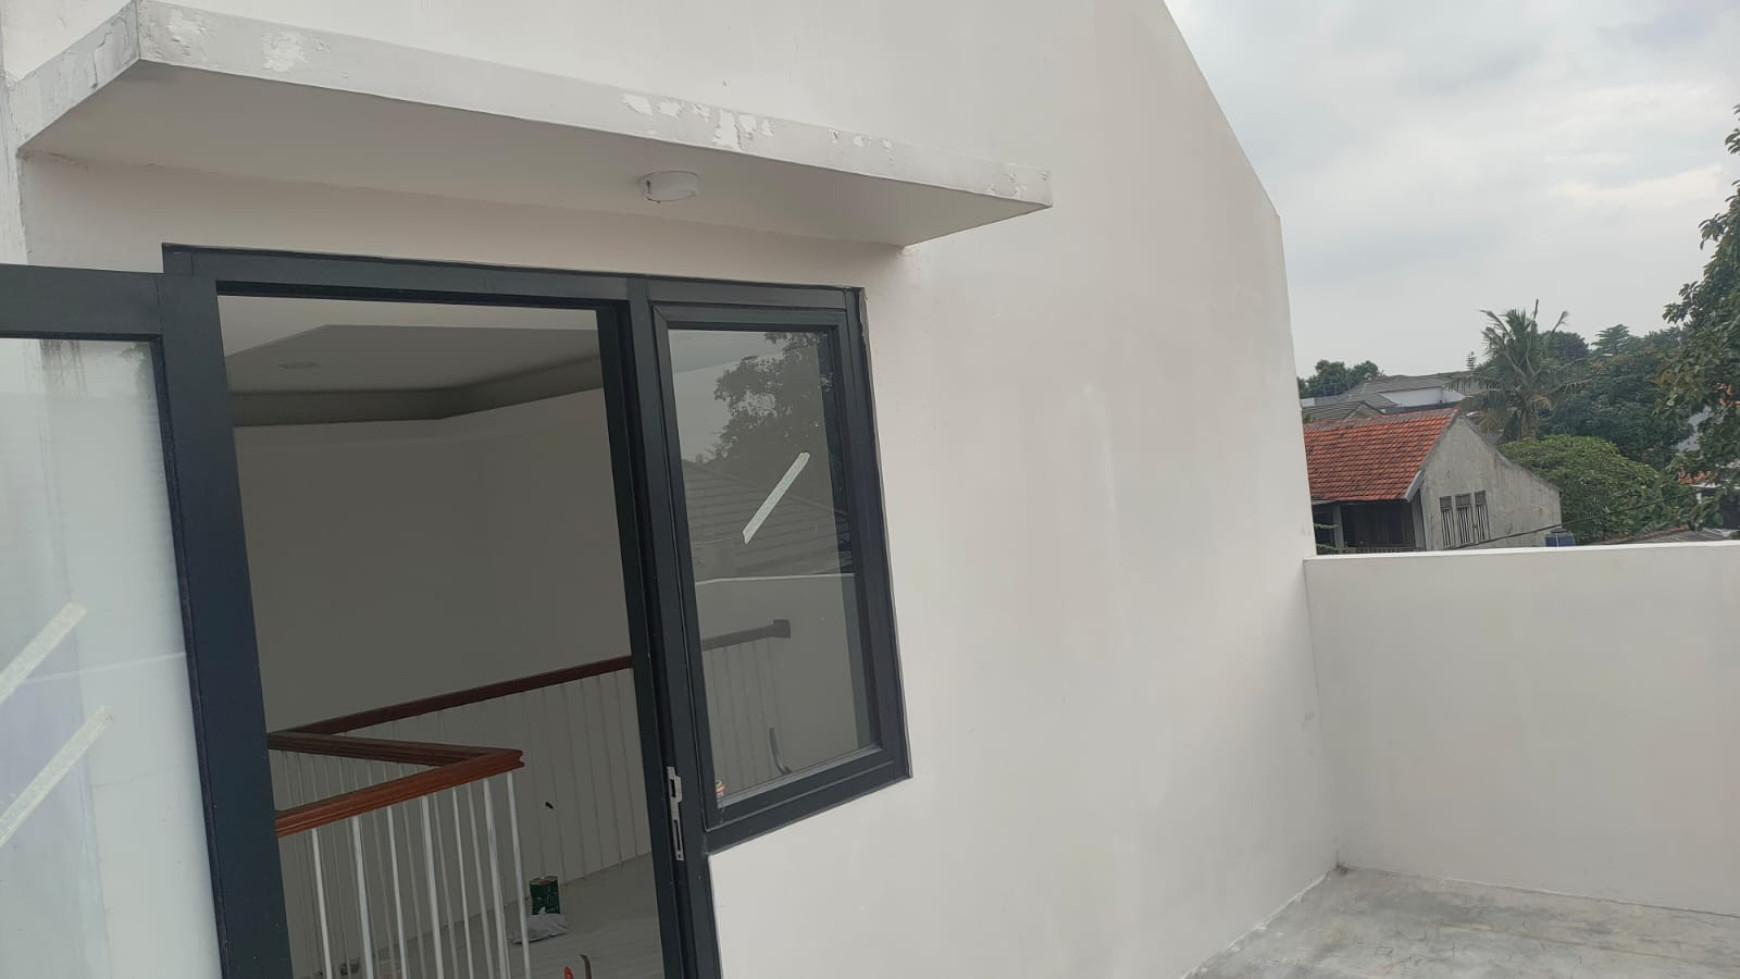 Rumah brand new siap huni di Cipete jakarta